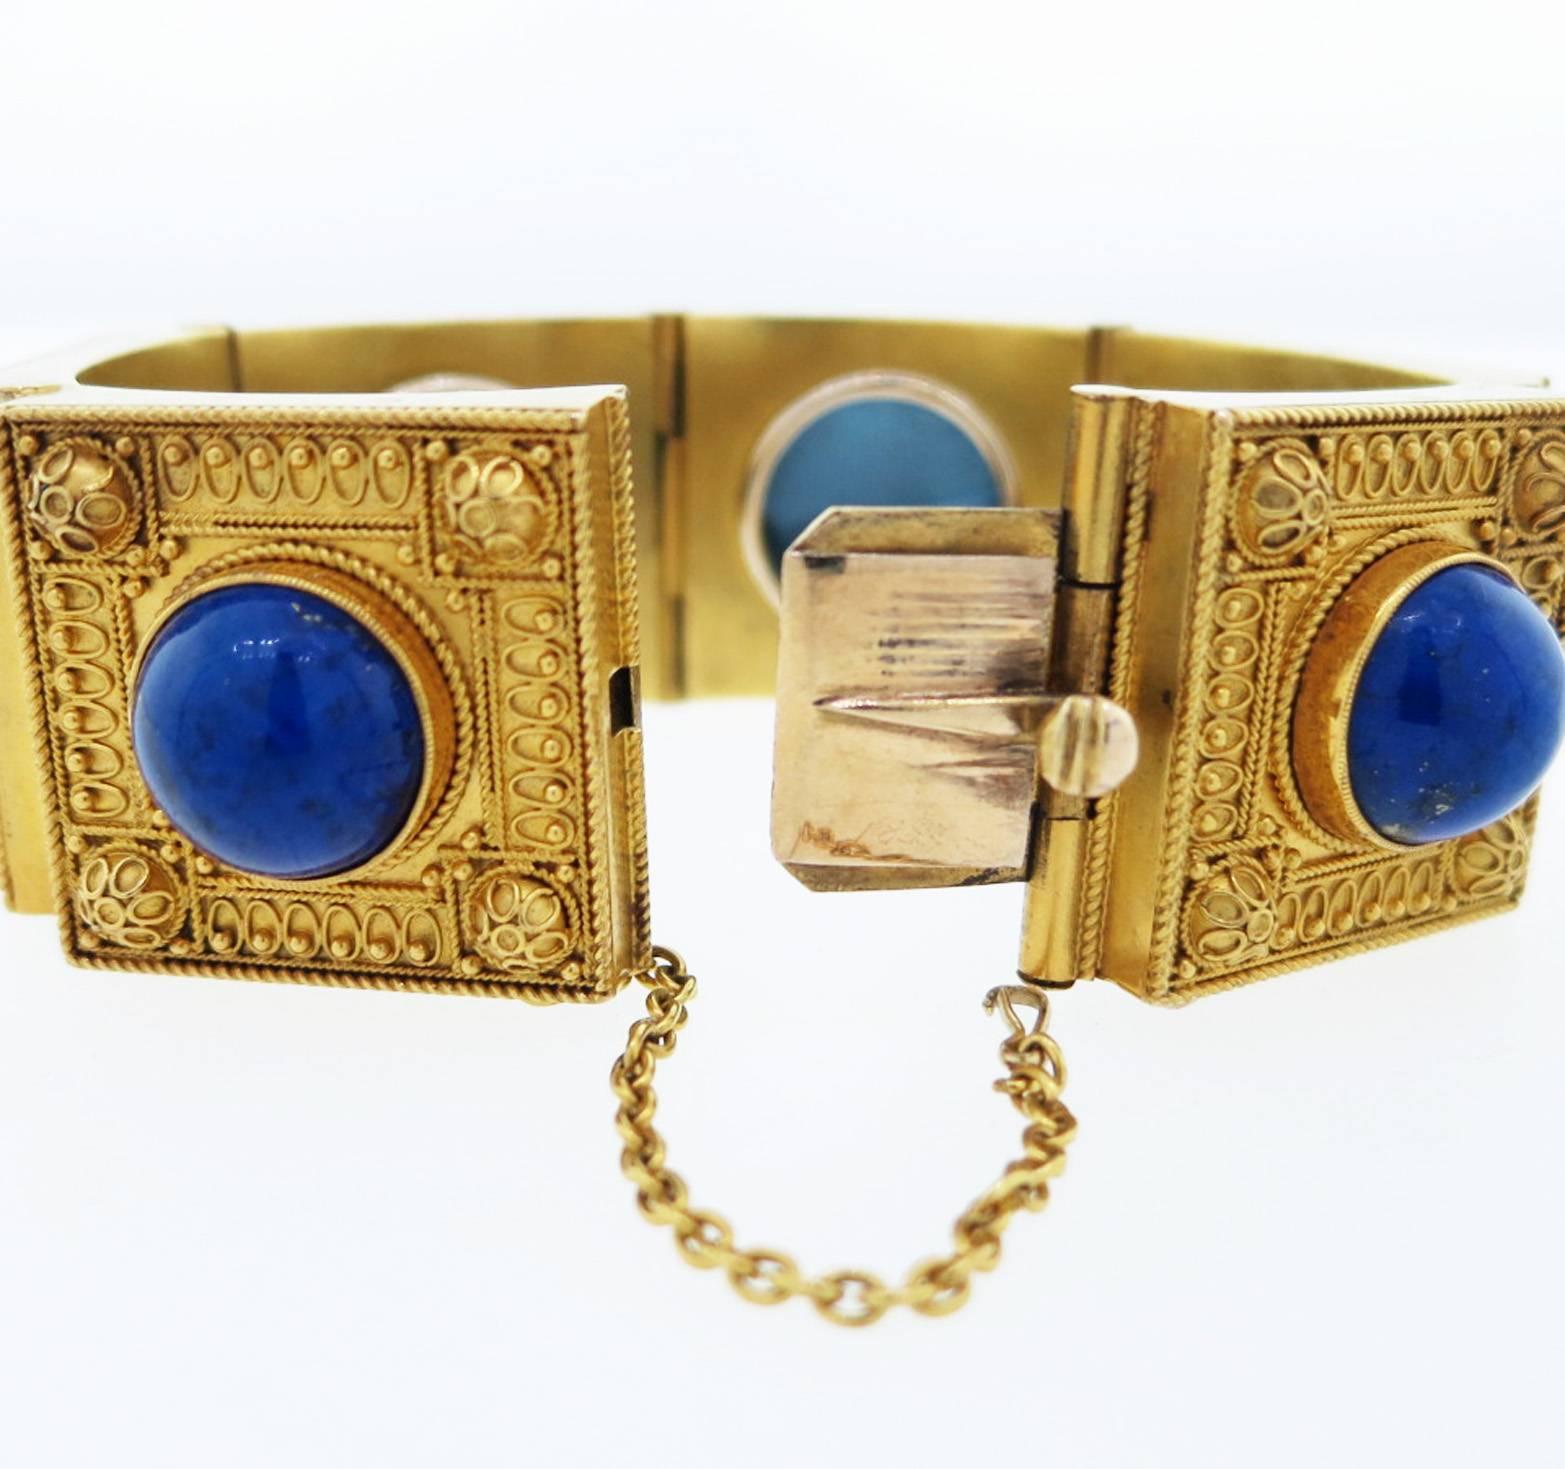 Remarkable Antique Lapis Lazuli Locket Gold Bracelet In Excellent Condition For Sale In Lambertville, NJ